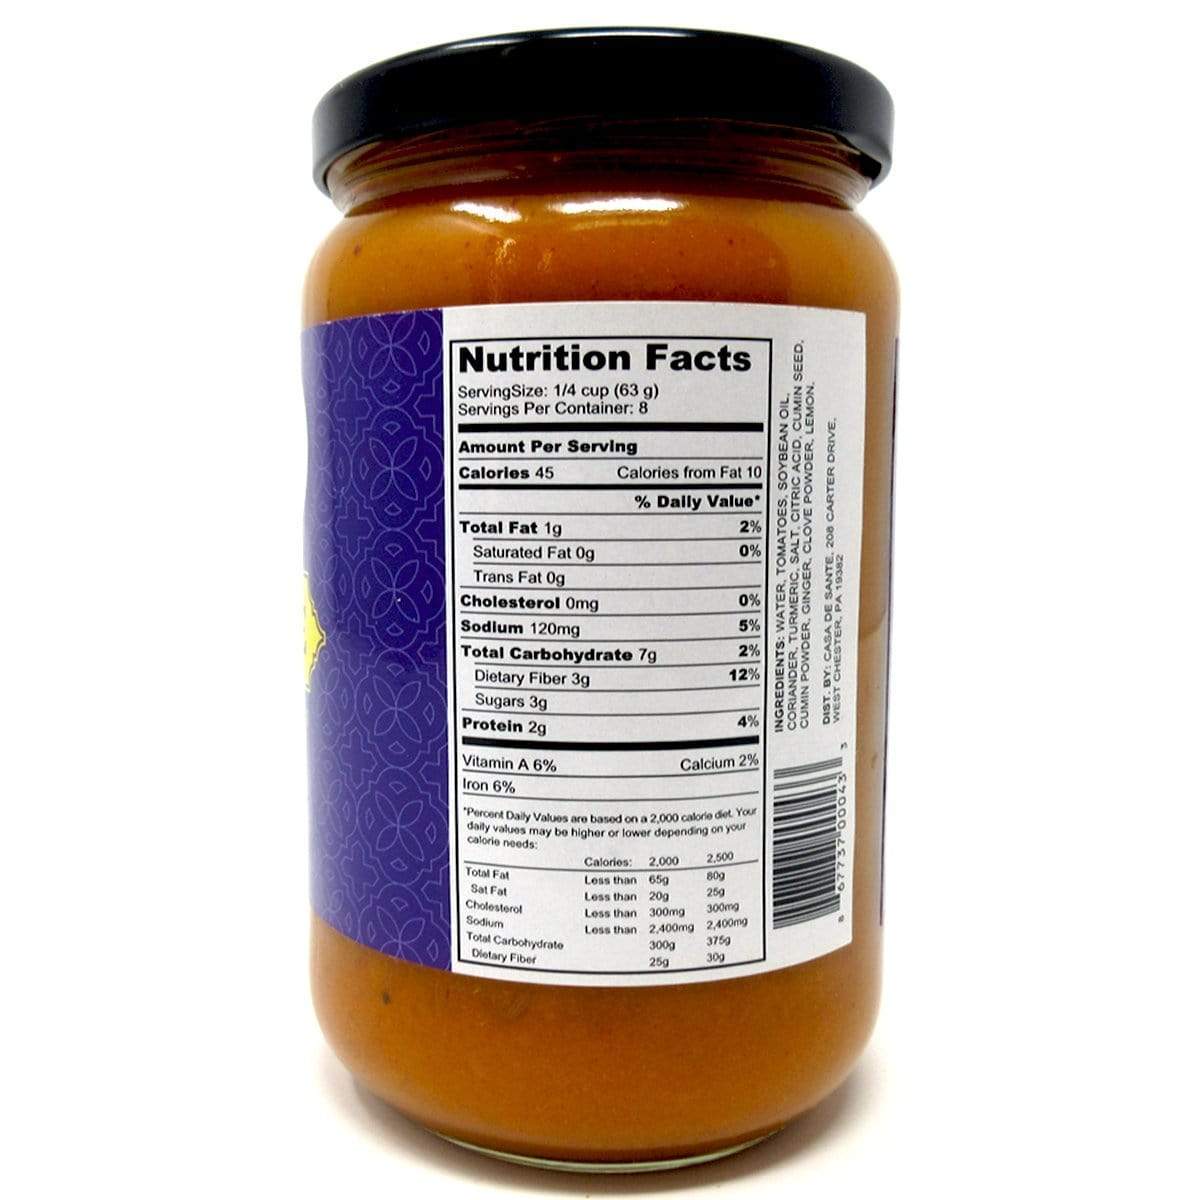 Low FODMAP Certified Curry Sauce - No Onion No Garlic, Gluten & Lactose-free, Low Sodium & Fat, Low Carb, Whole30, Paleo, Keto, Gut Friendly, Mild - casa de sante